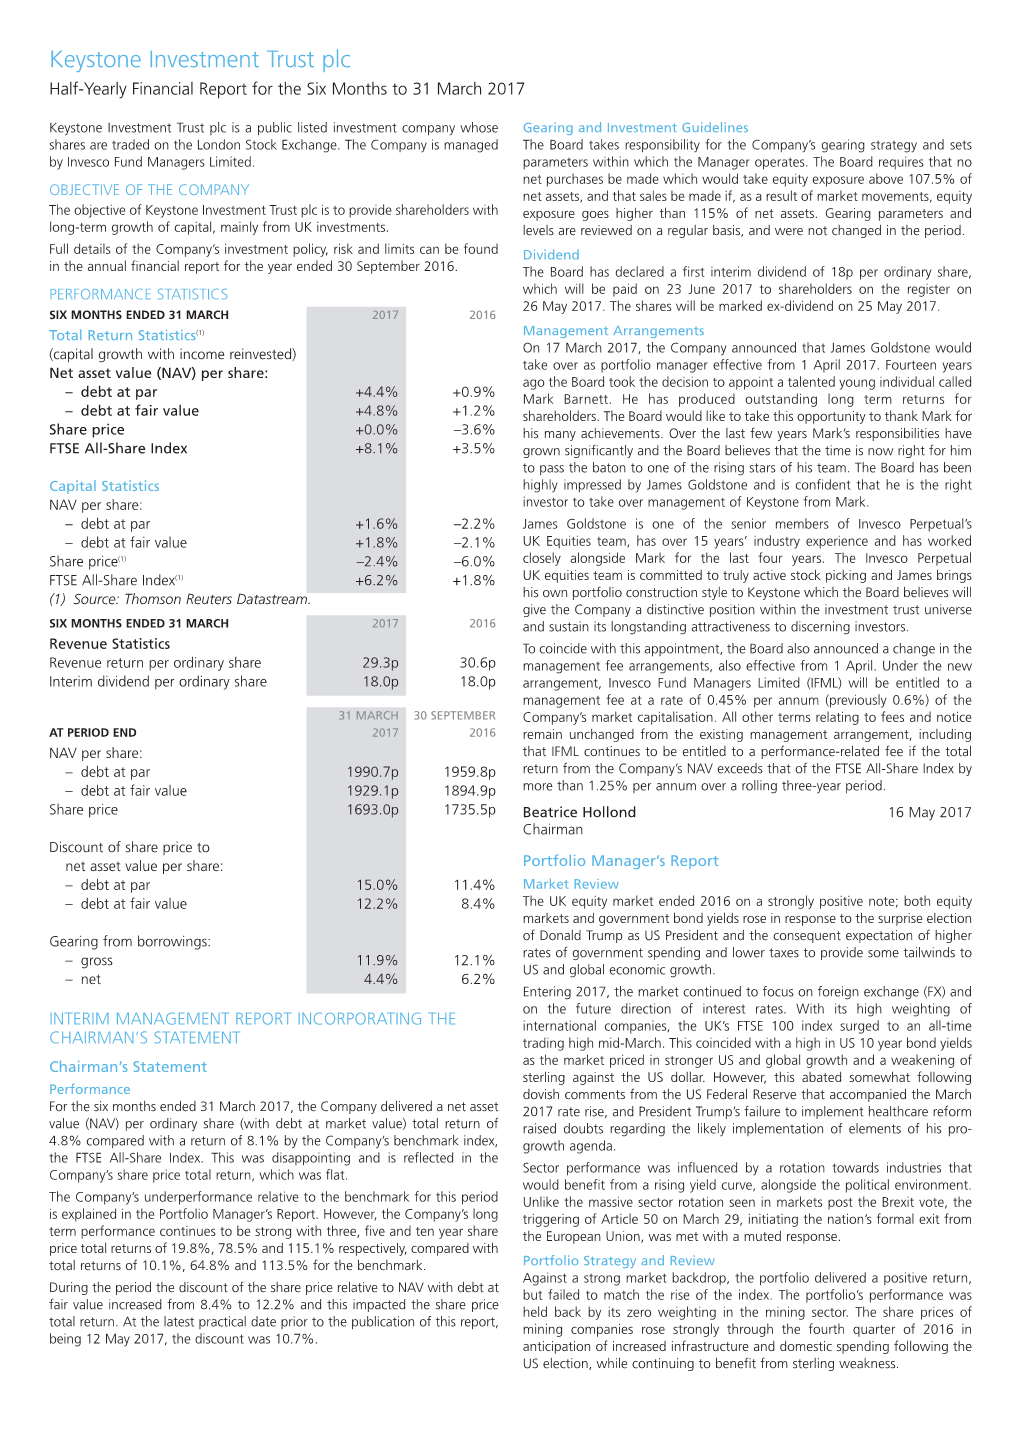 Keystone Investment Trust Half Year Report